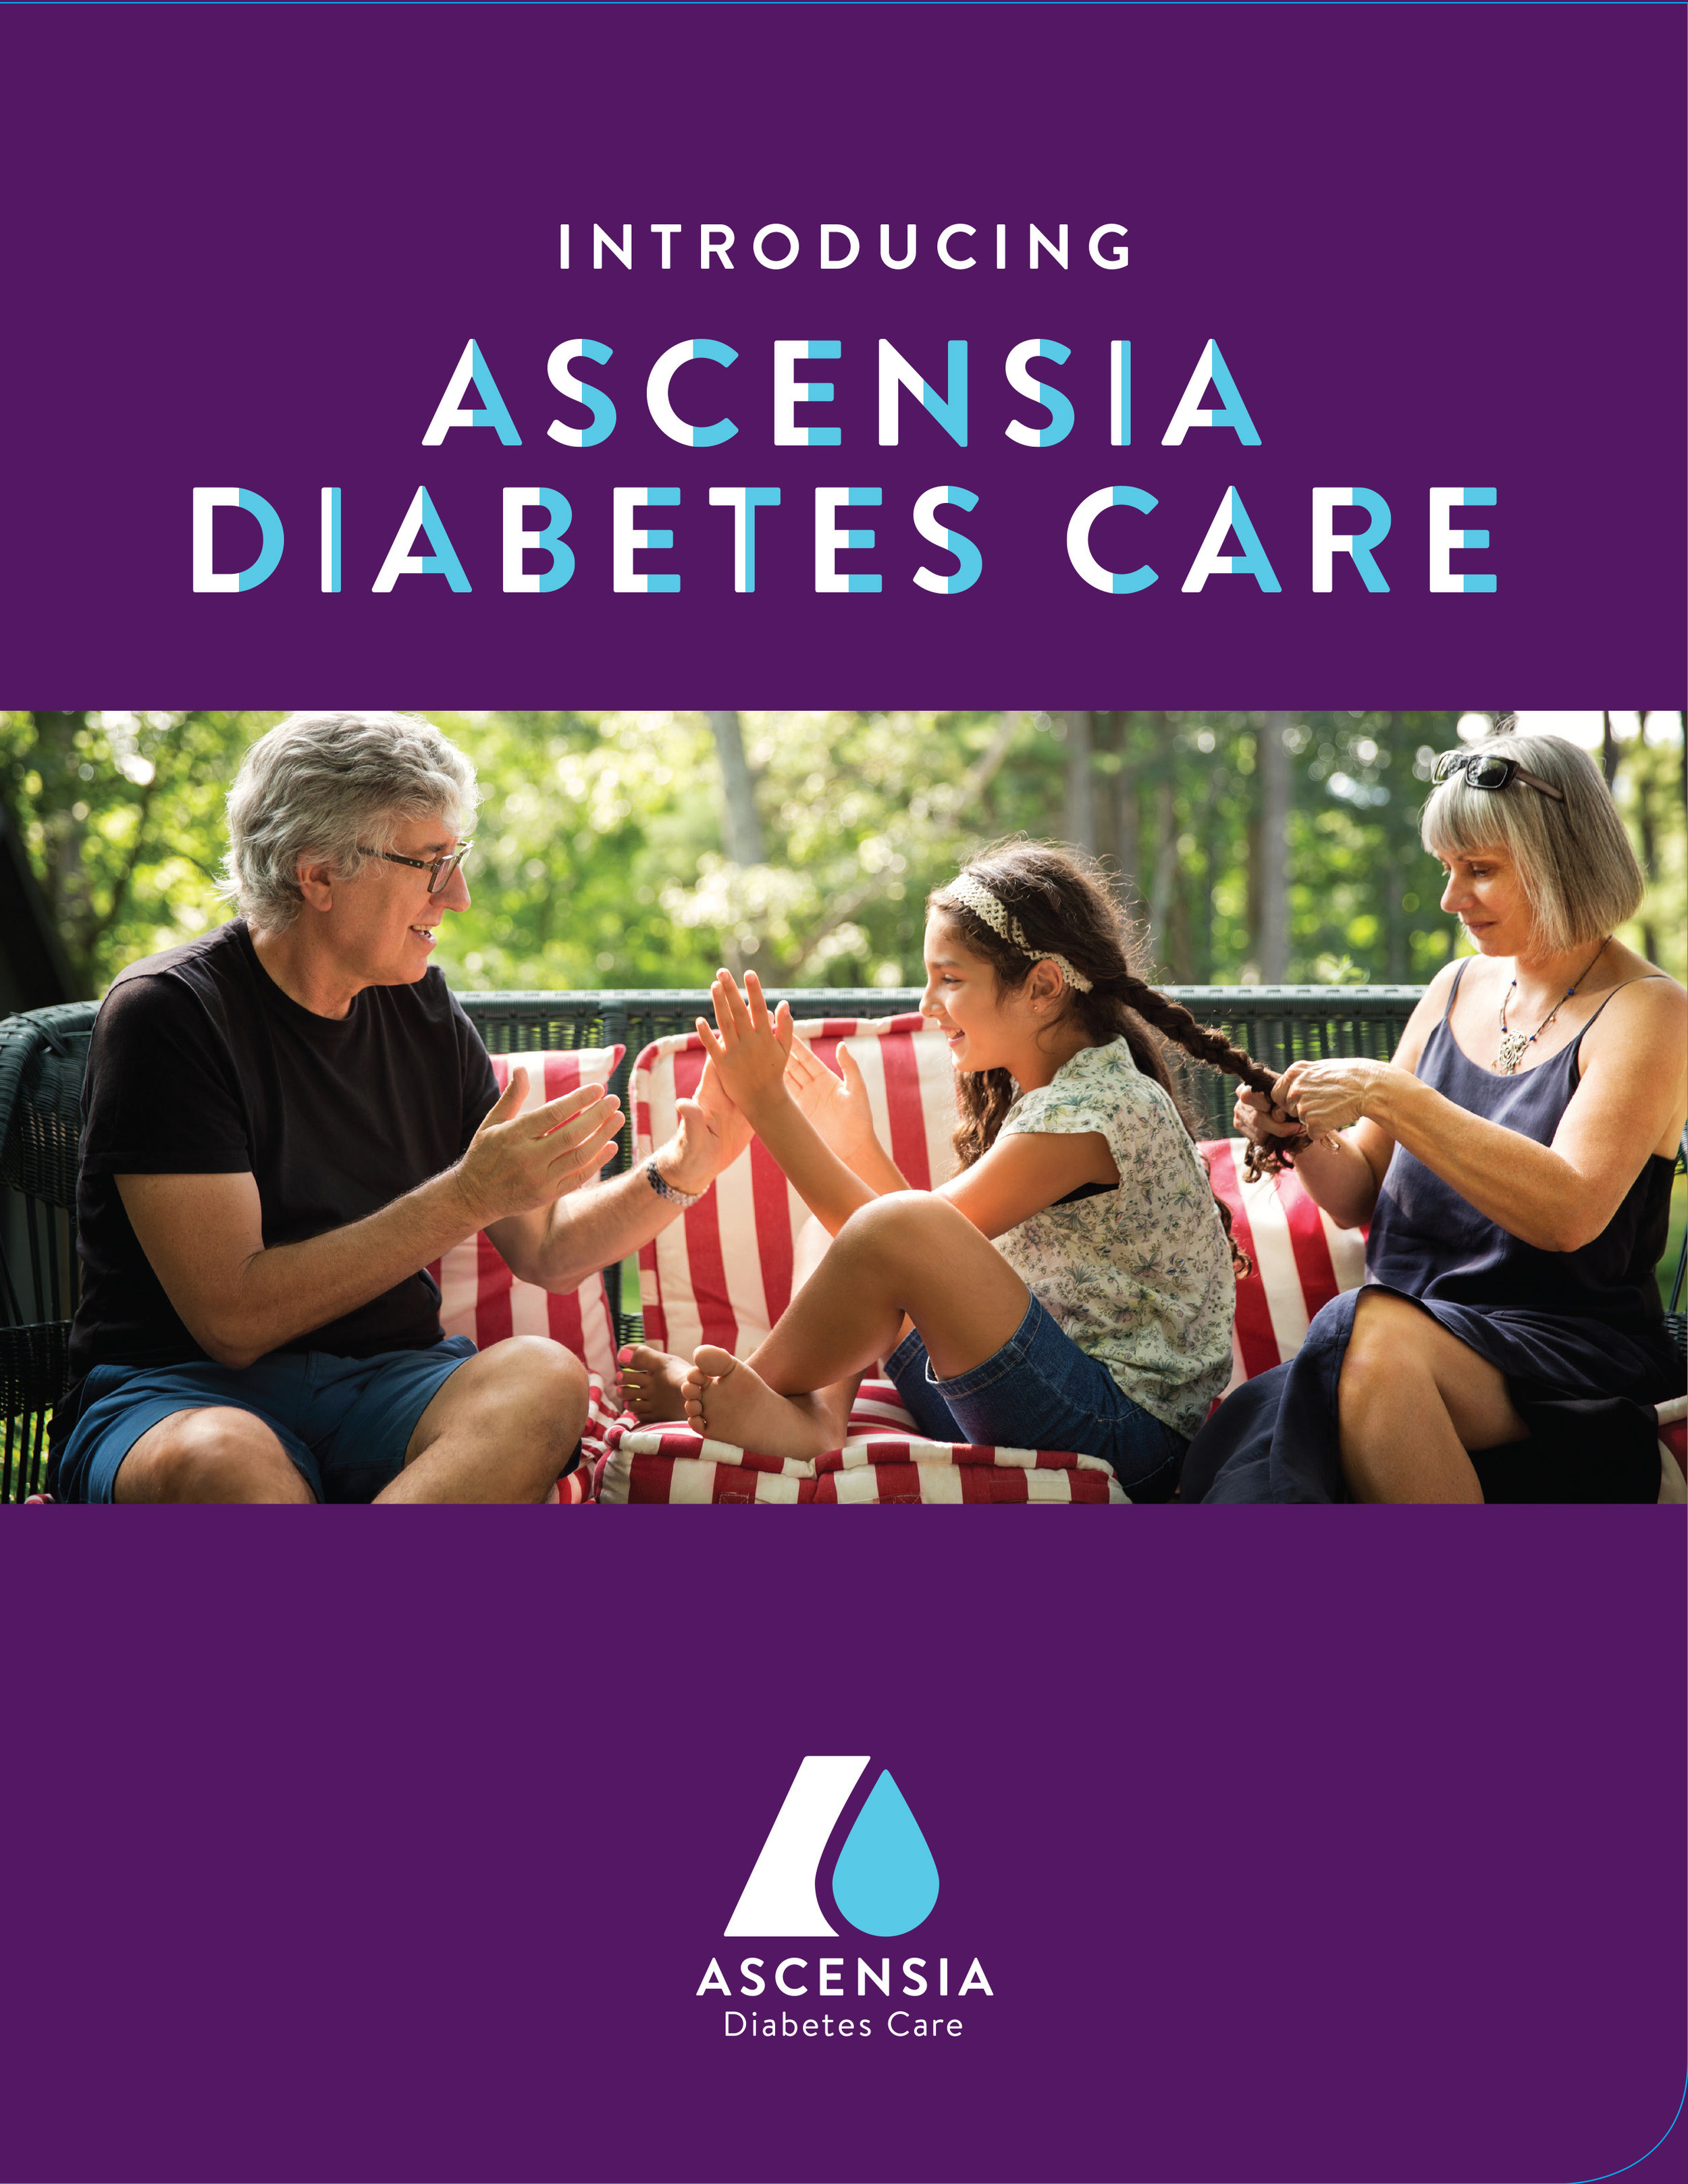 Ascensia Diabetes Care Corporate Information